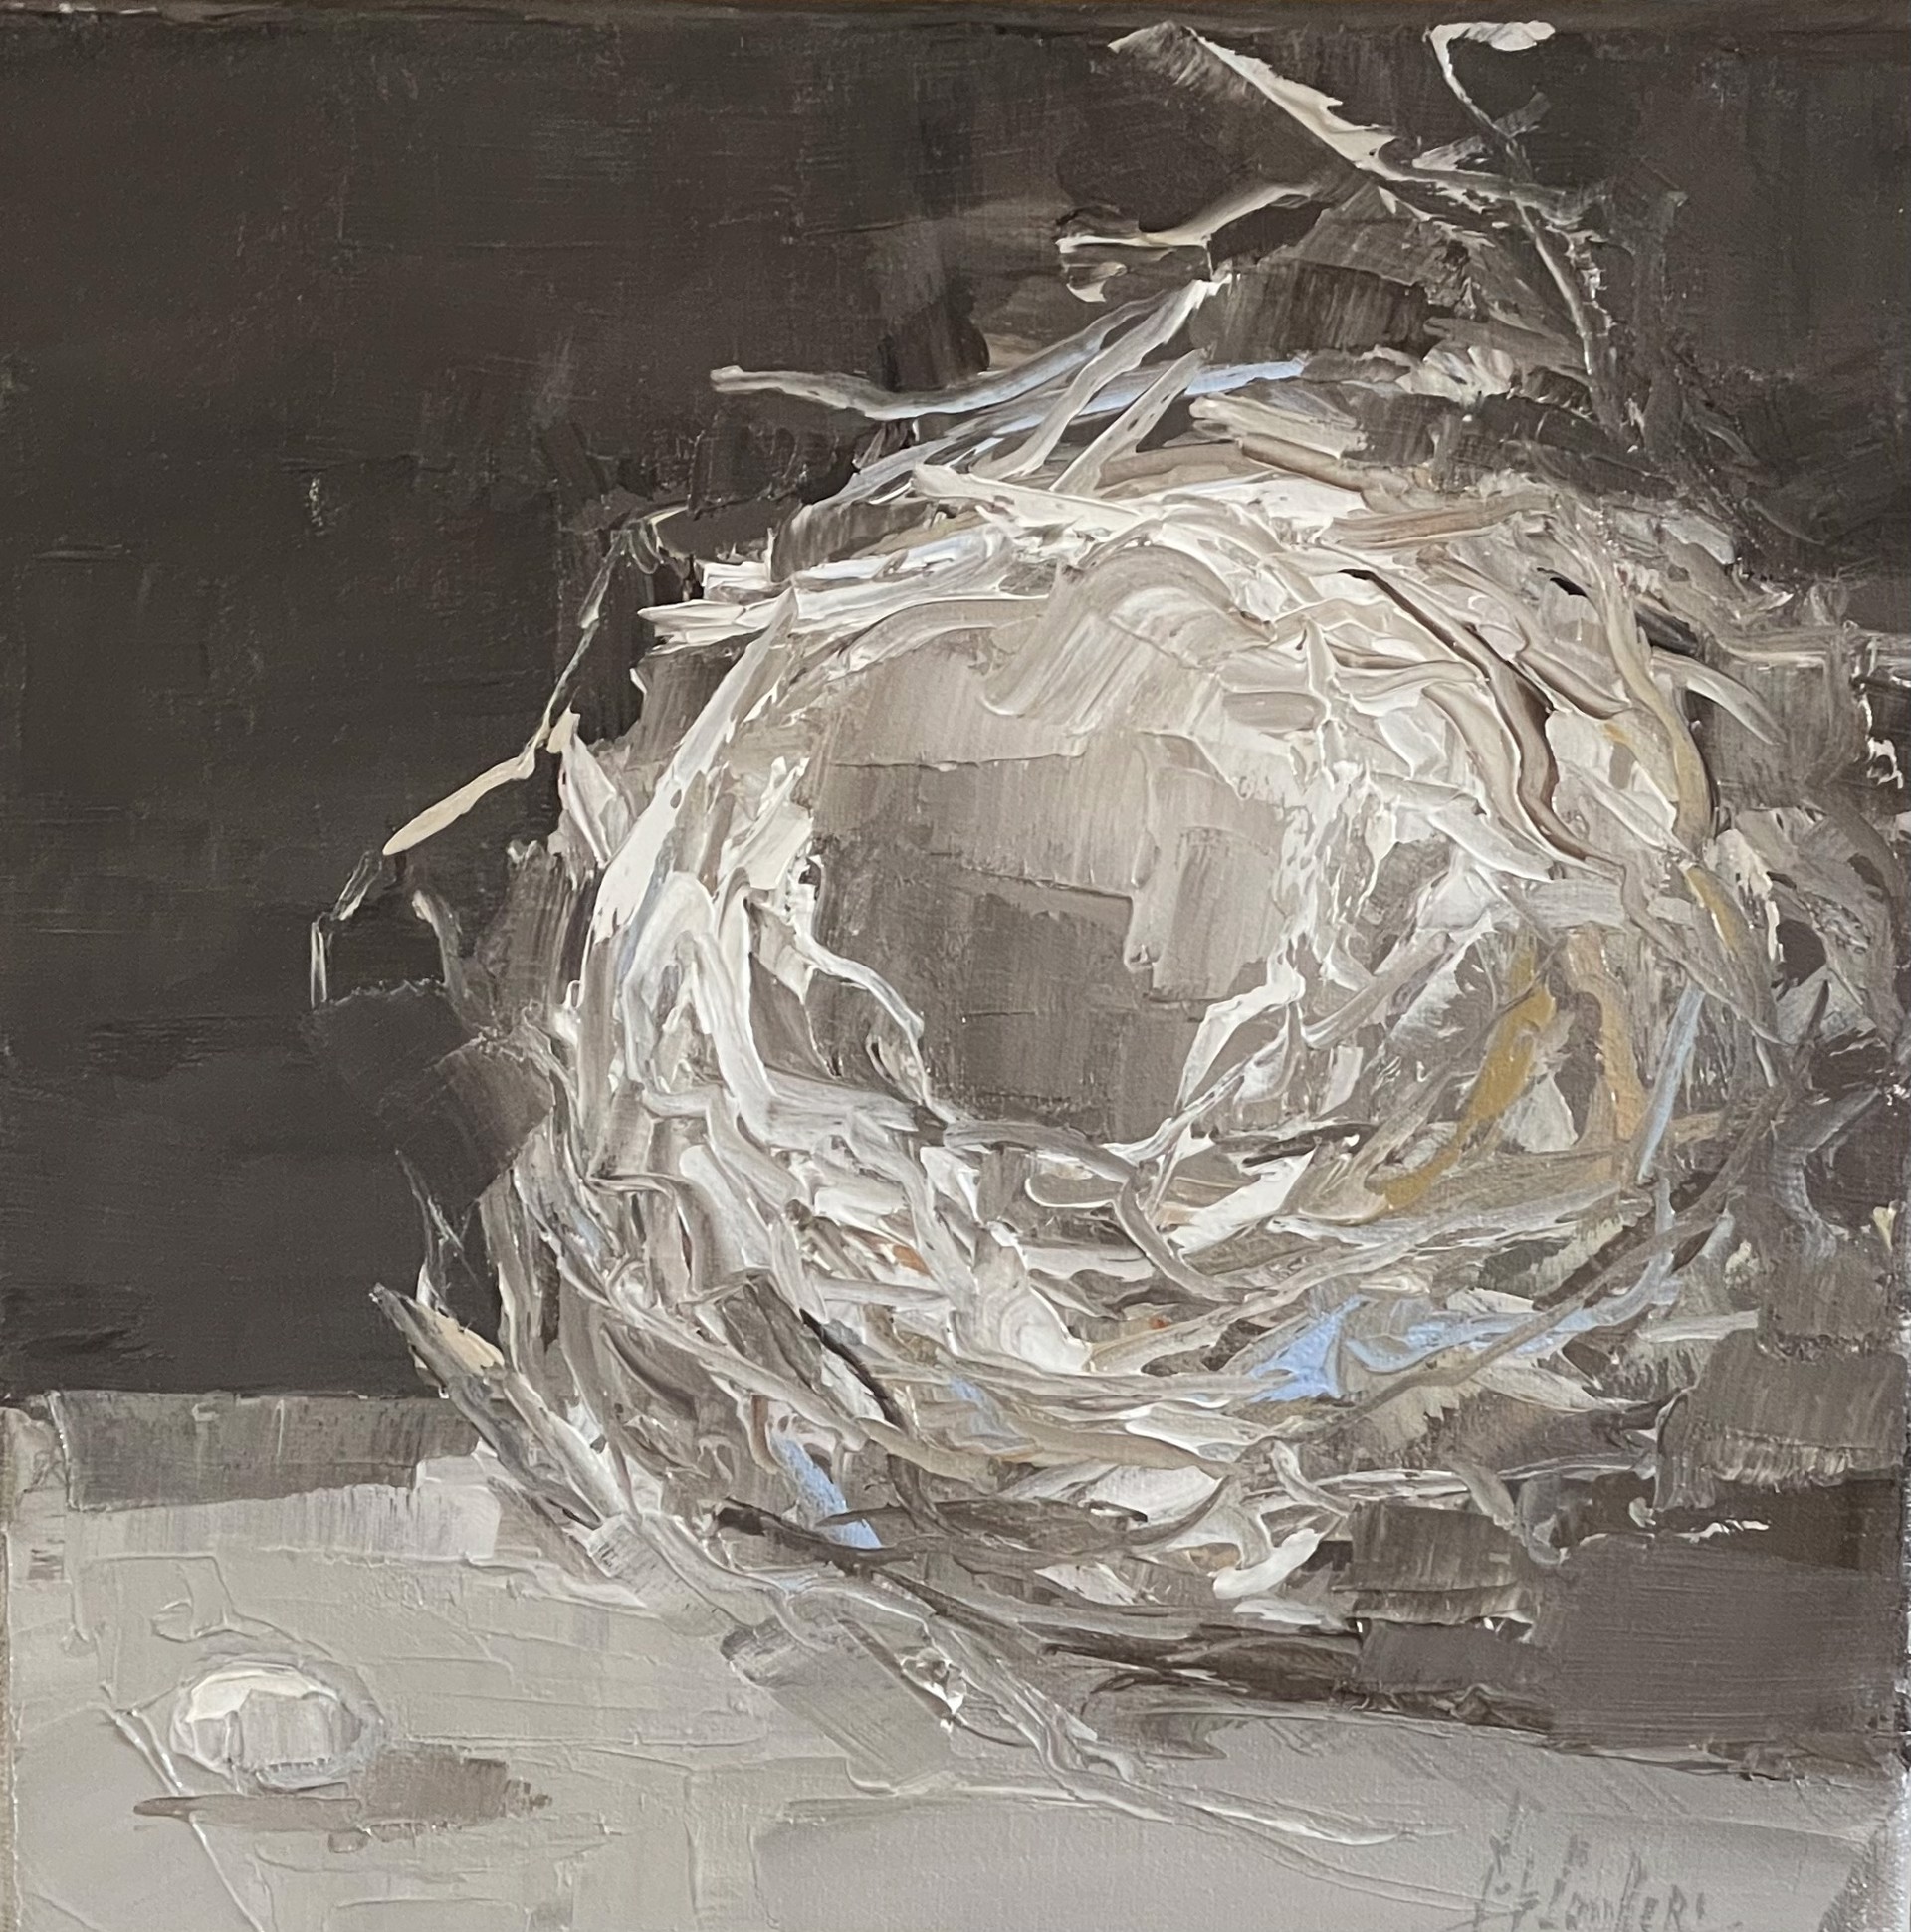 Nest by Barbara Flowers